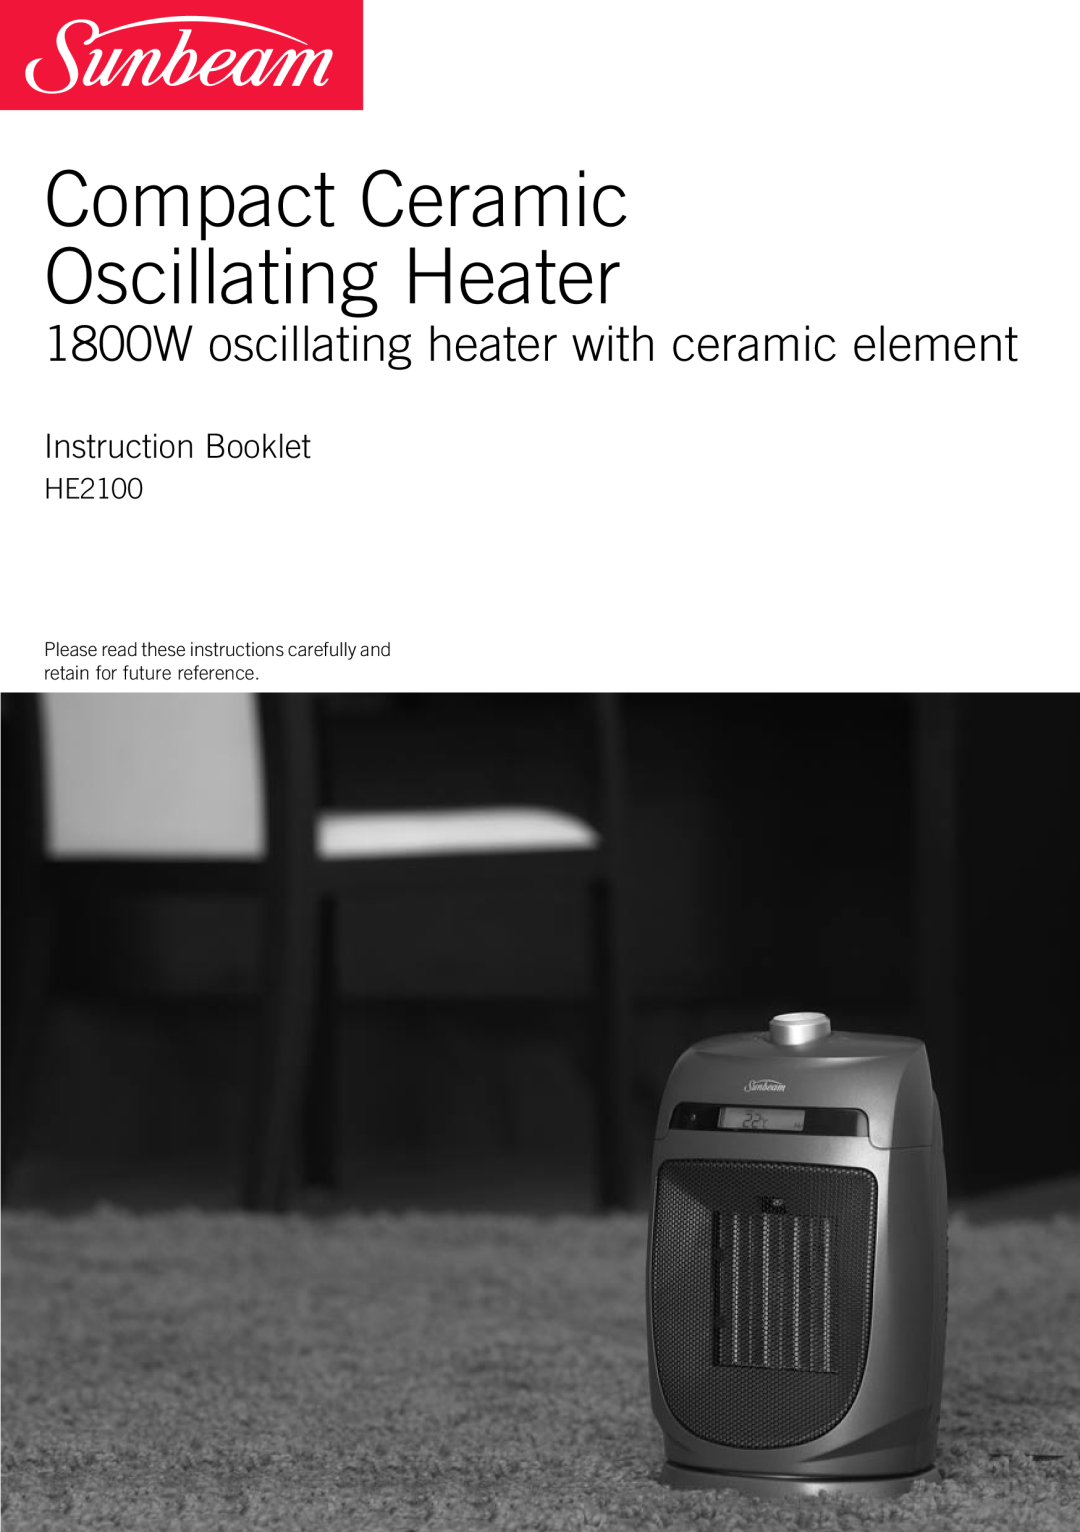 Sunbeam Bedding HE2100 manual Compact Ceramic Oscillating Heater, 1800W oscillating heater with ceramic element 